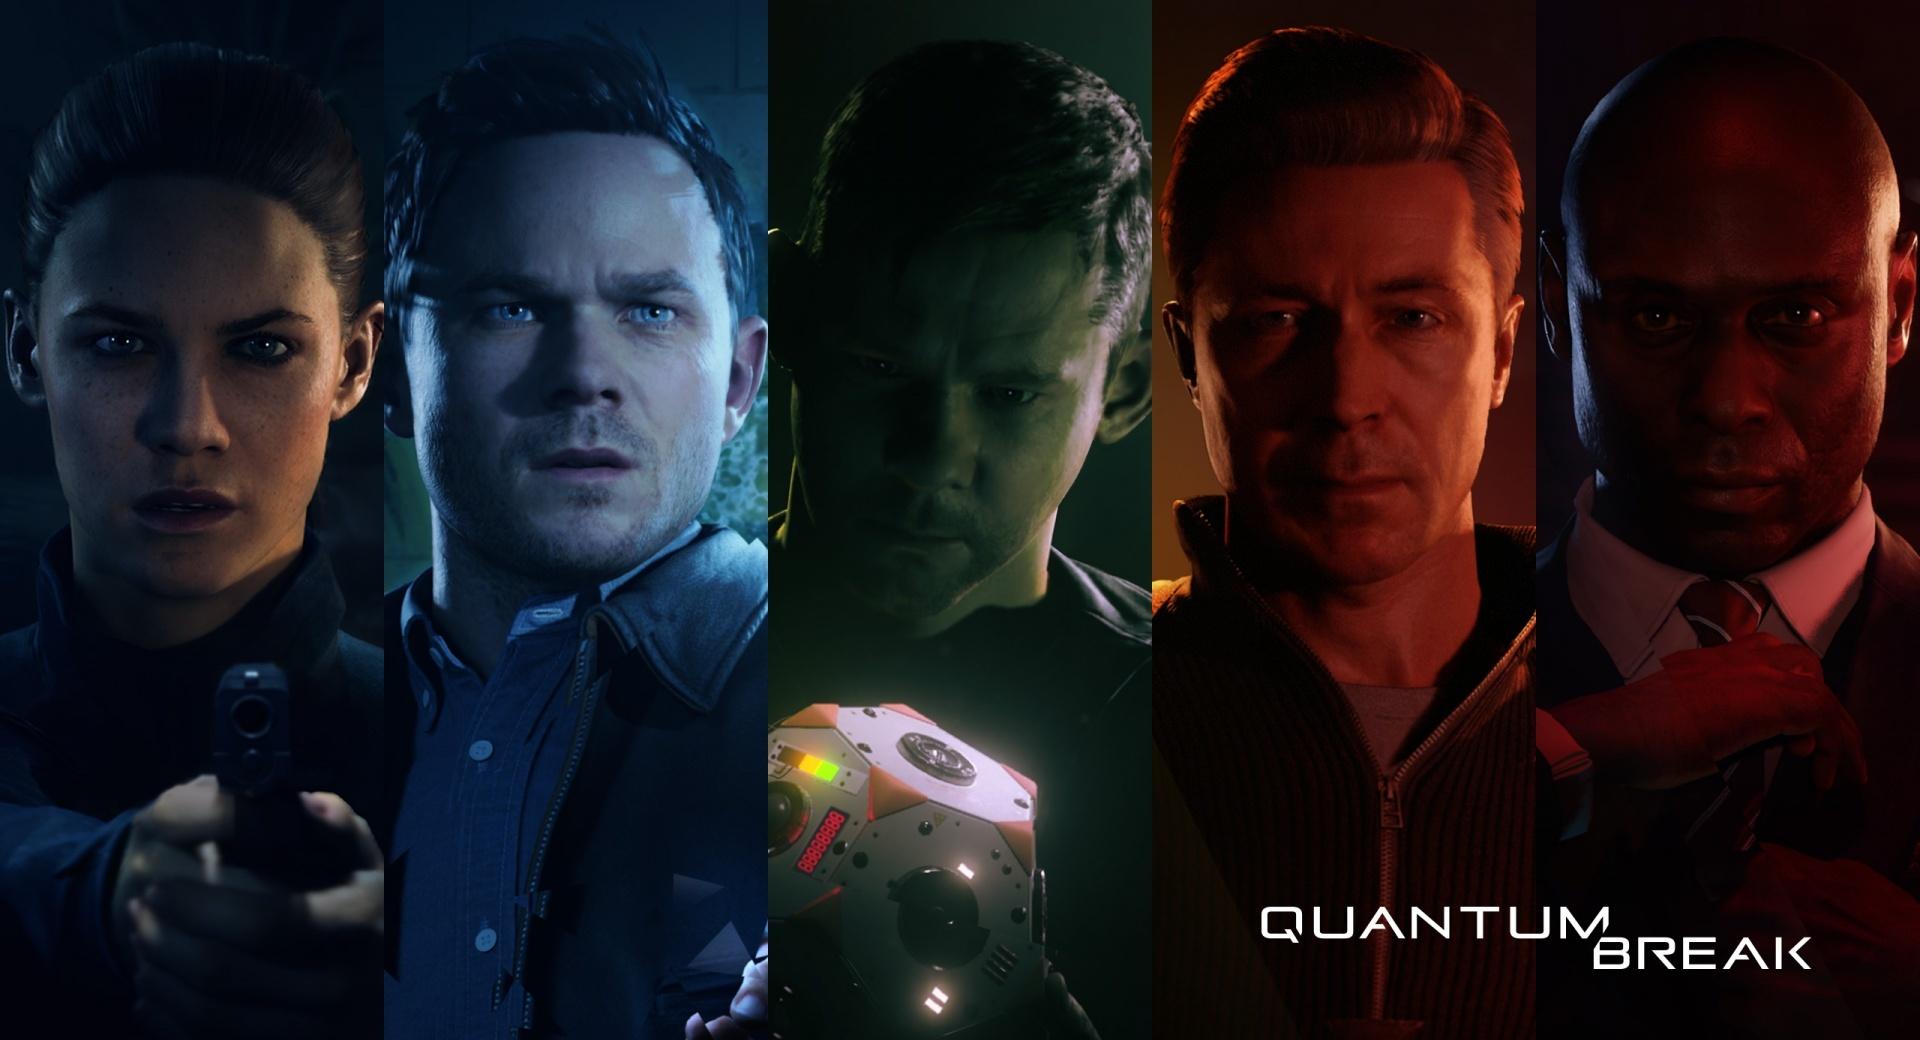 Quantum Break Cast at 1024 x 1024 iPad size wallpapers HD quality